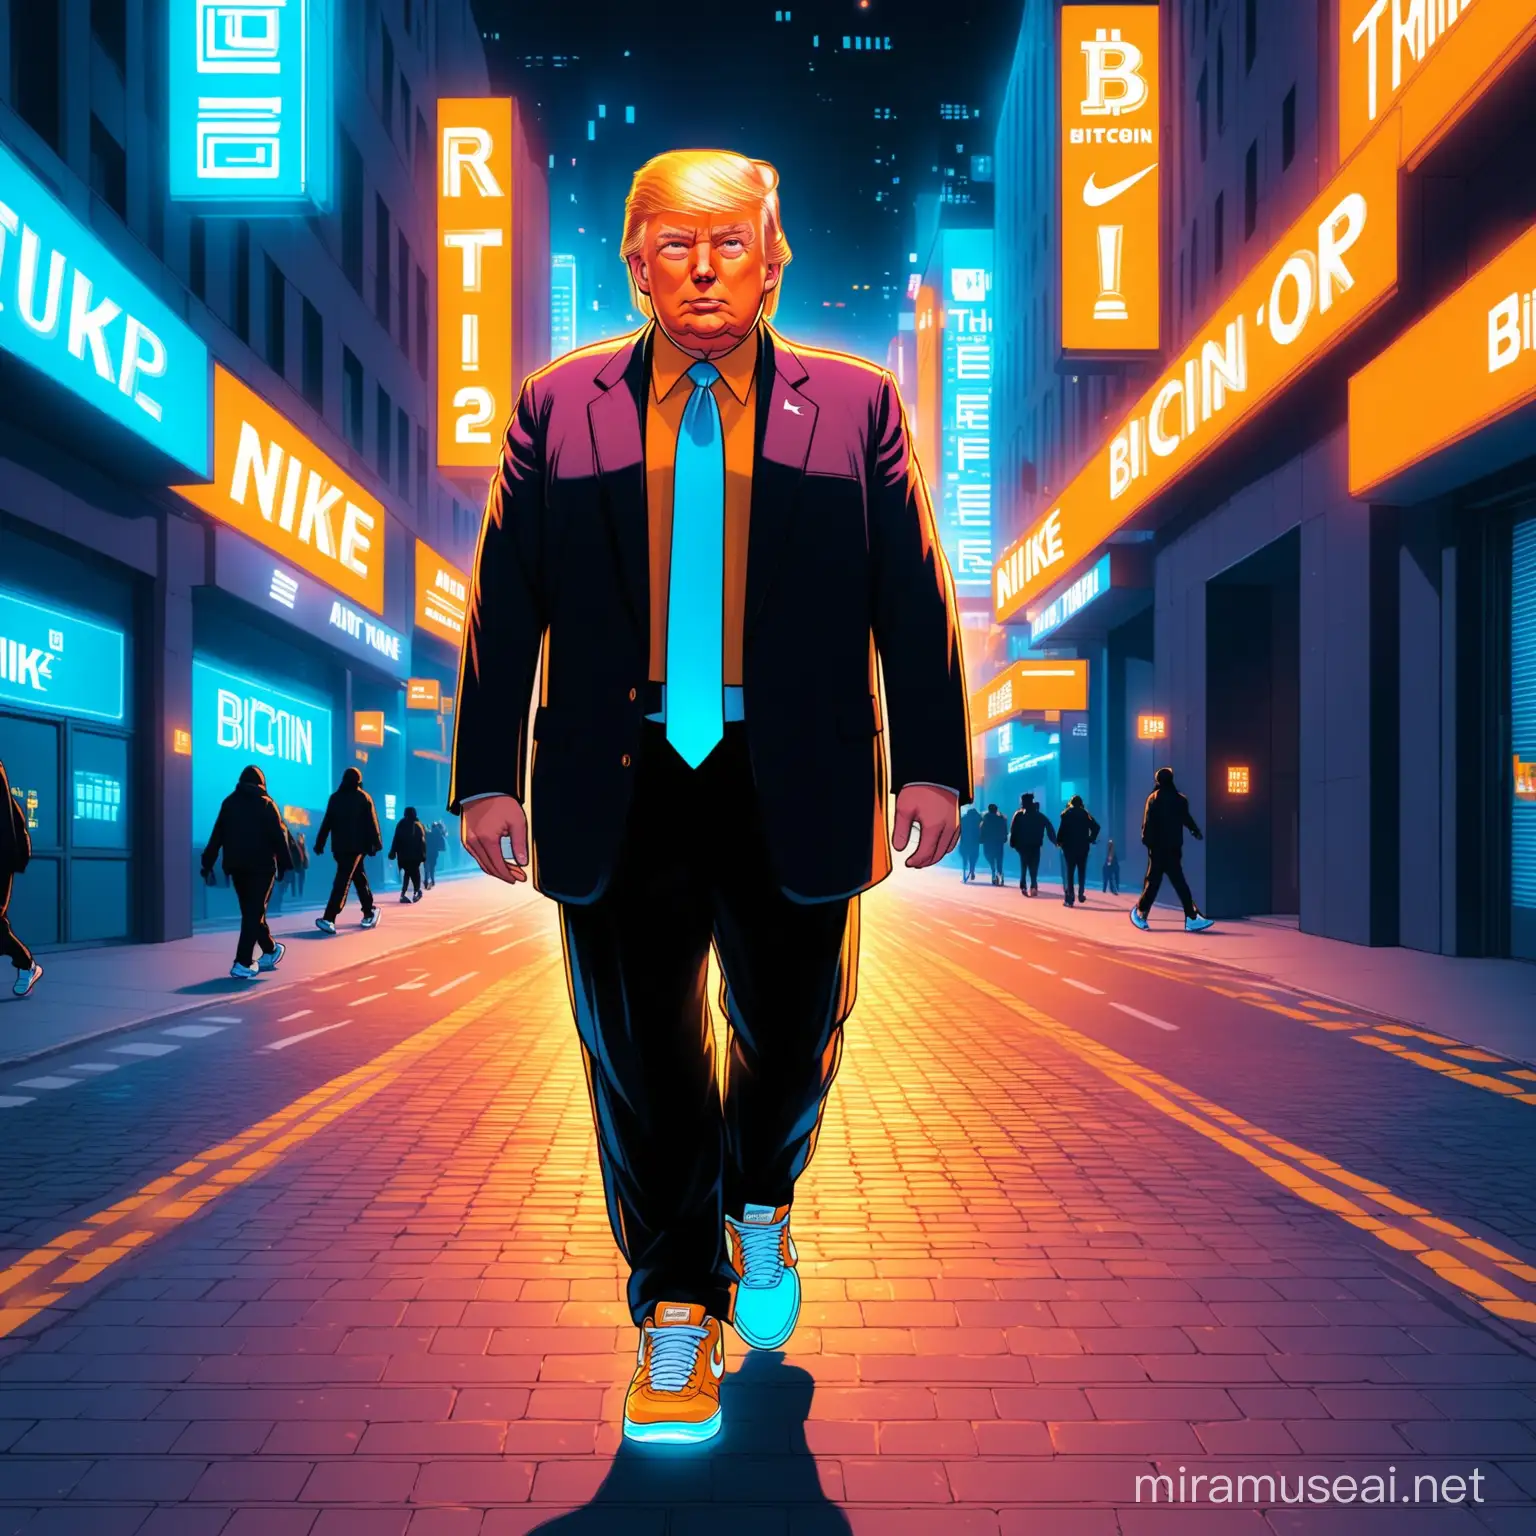 4k Funny Donald Trump in Nike Sneakers in walk in the street in a Modern bitcoin Neonlit city